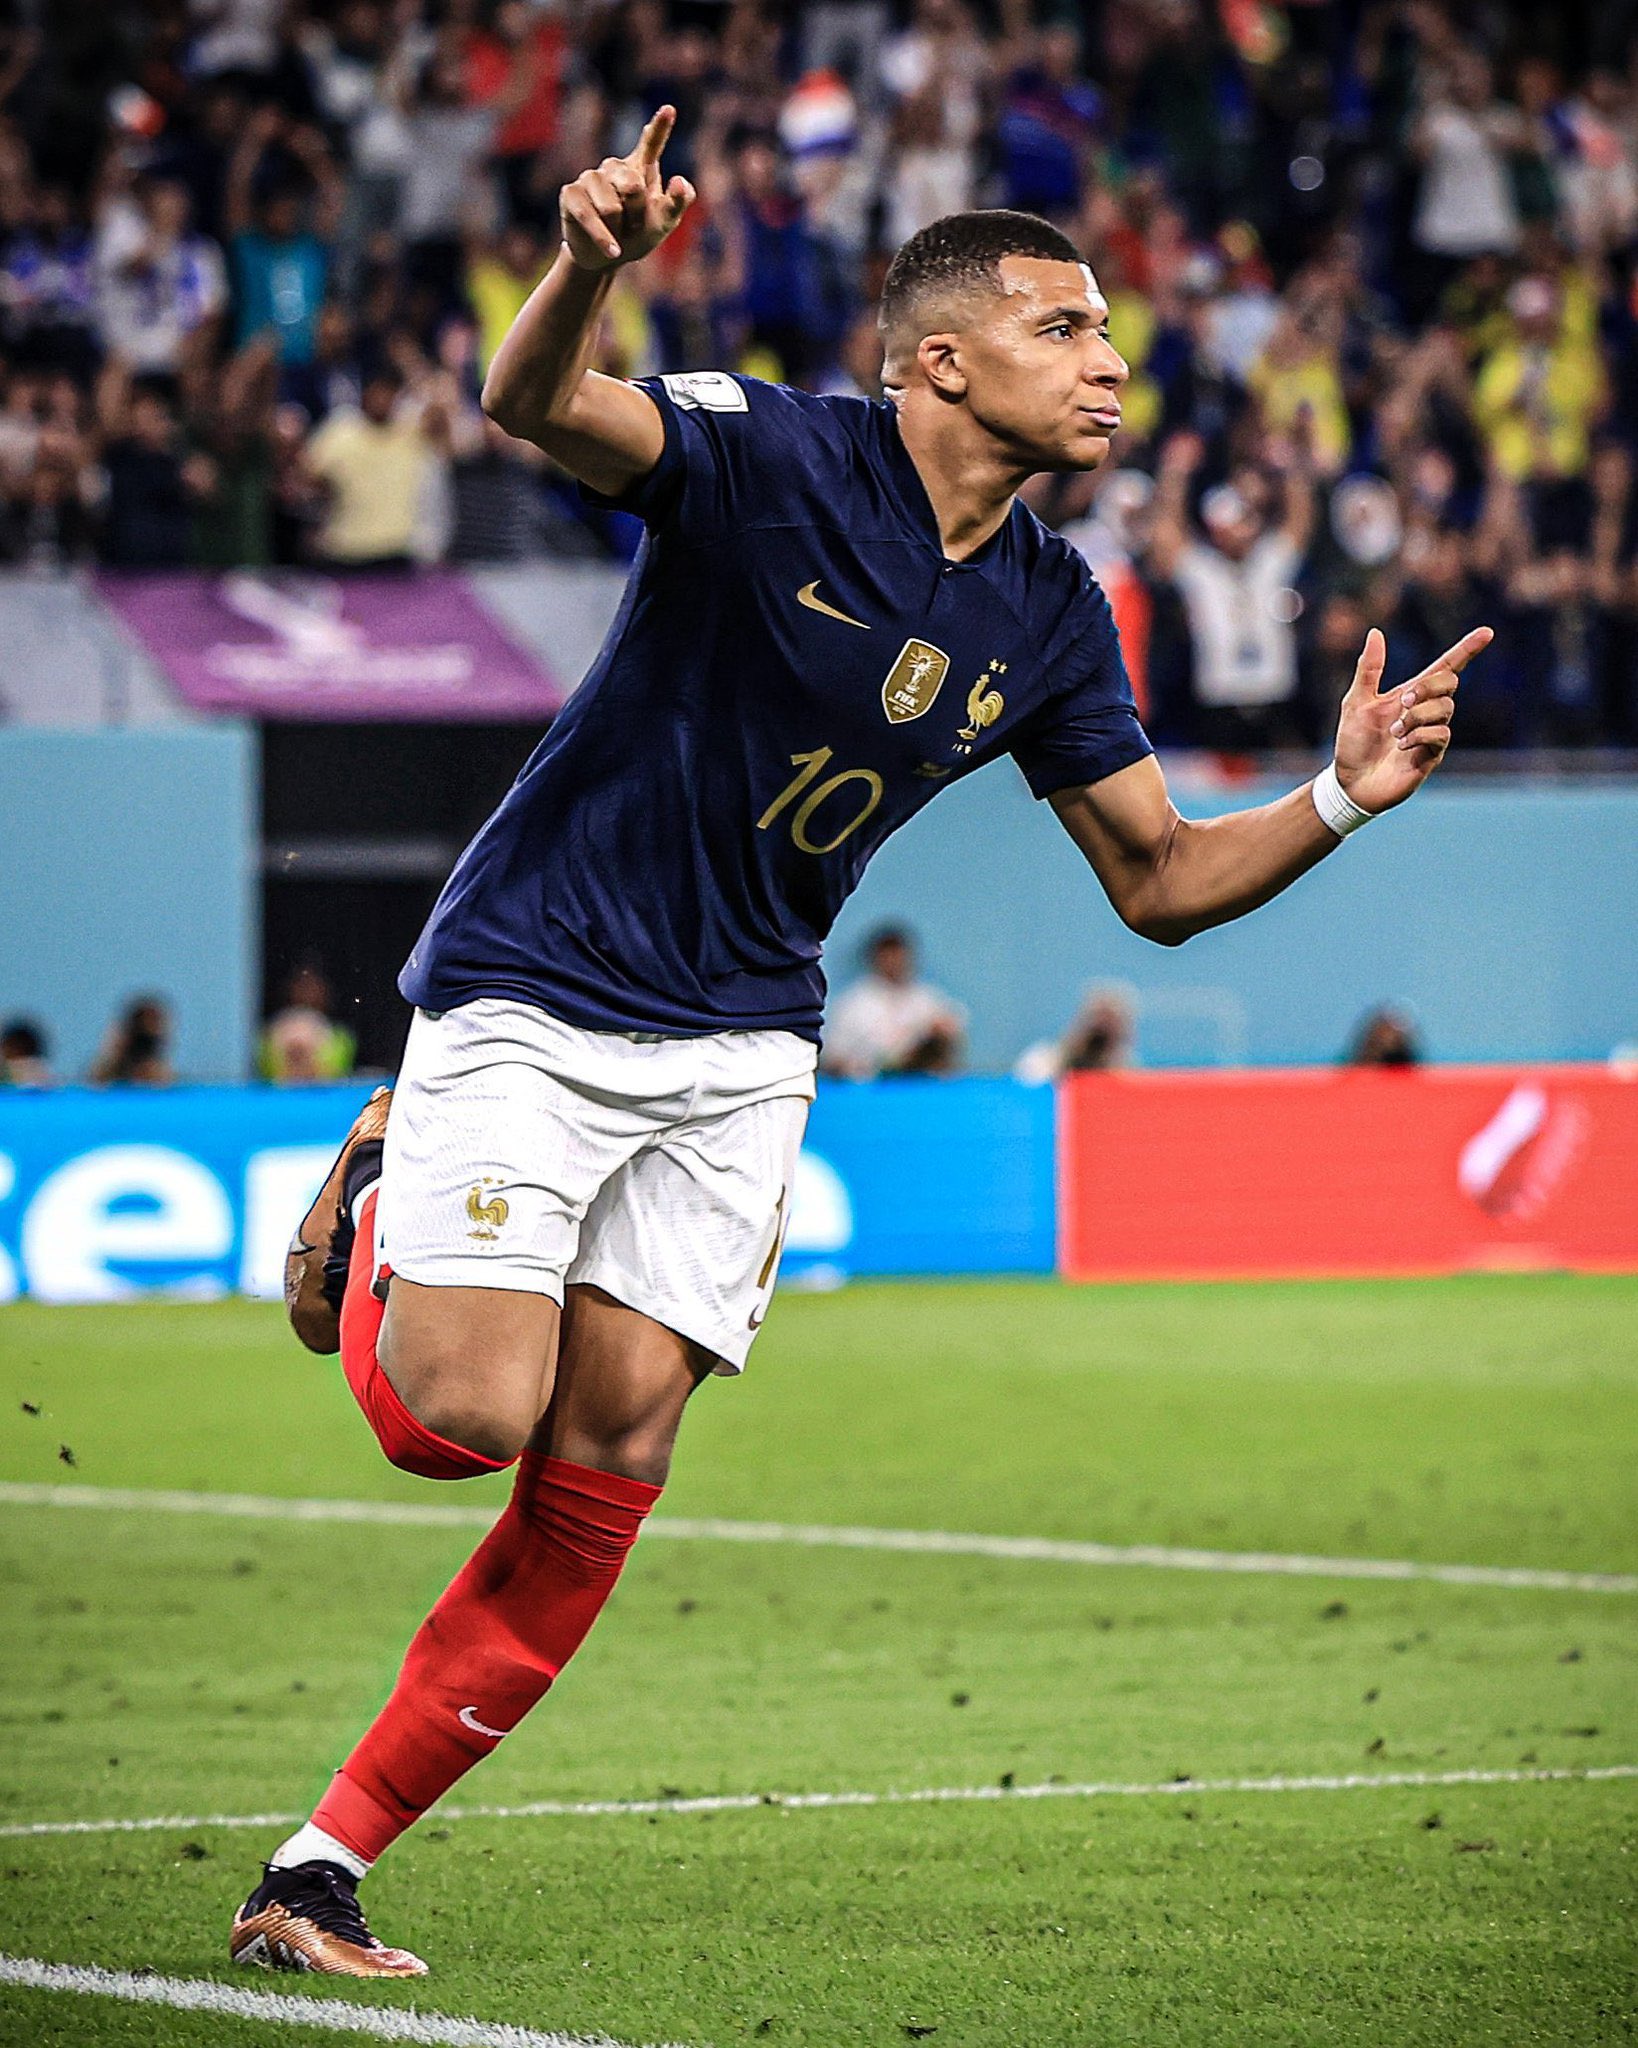 Copa do Mundo: artilheiro, Mbappé mira recordes de Ronaldo e Klose